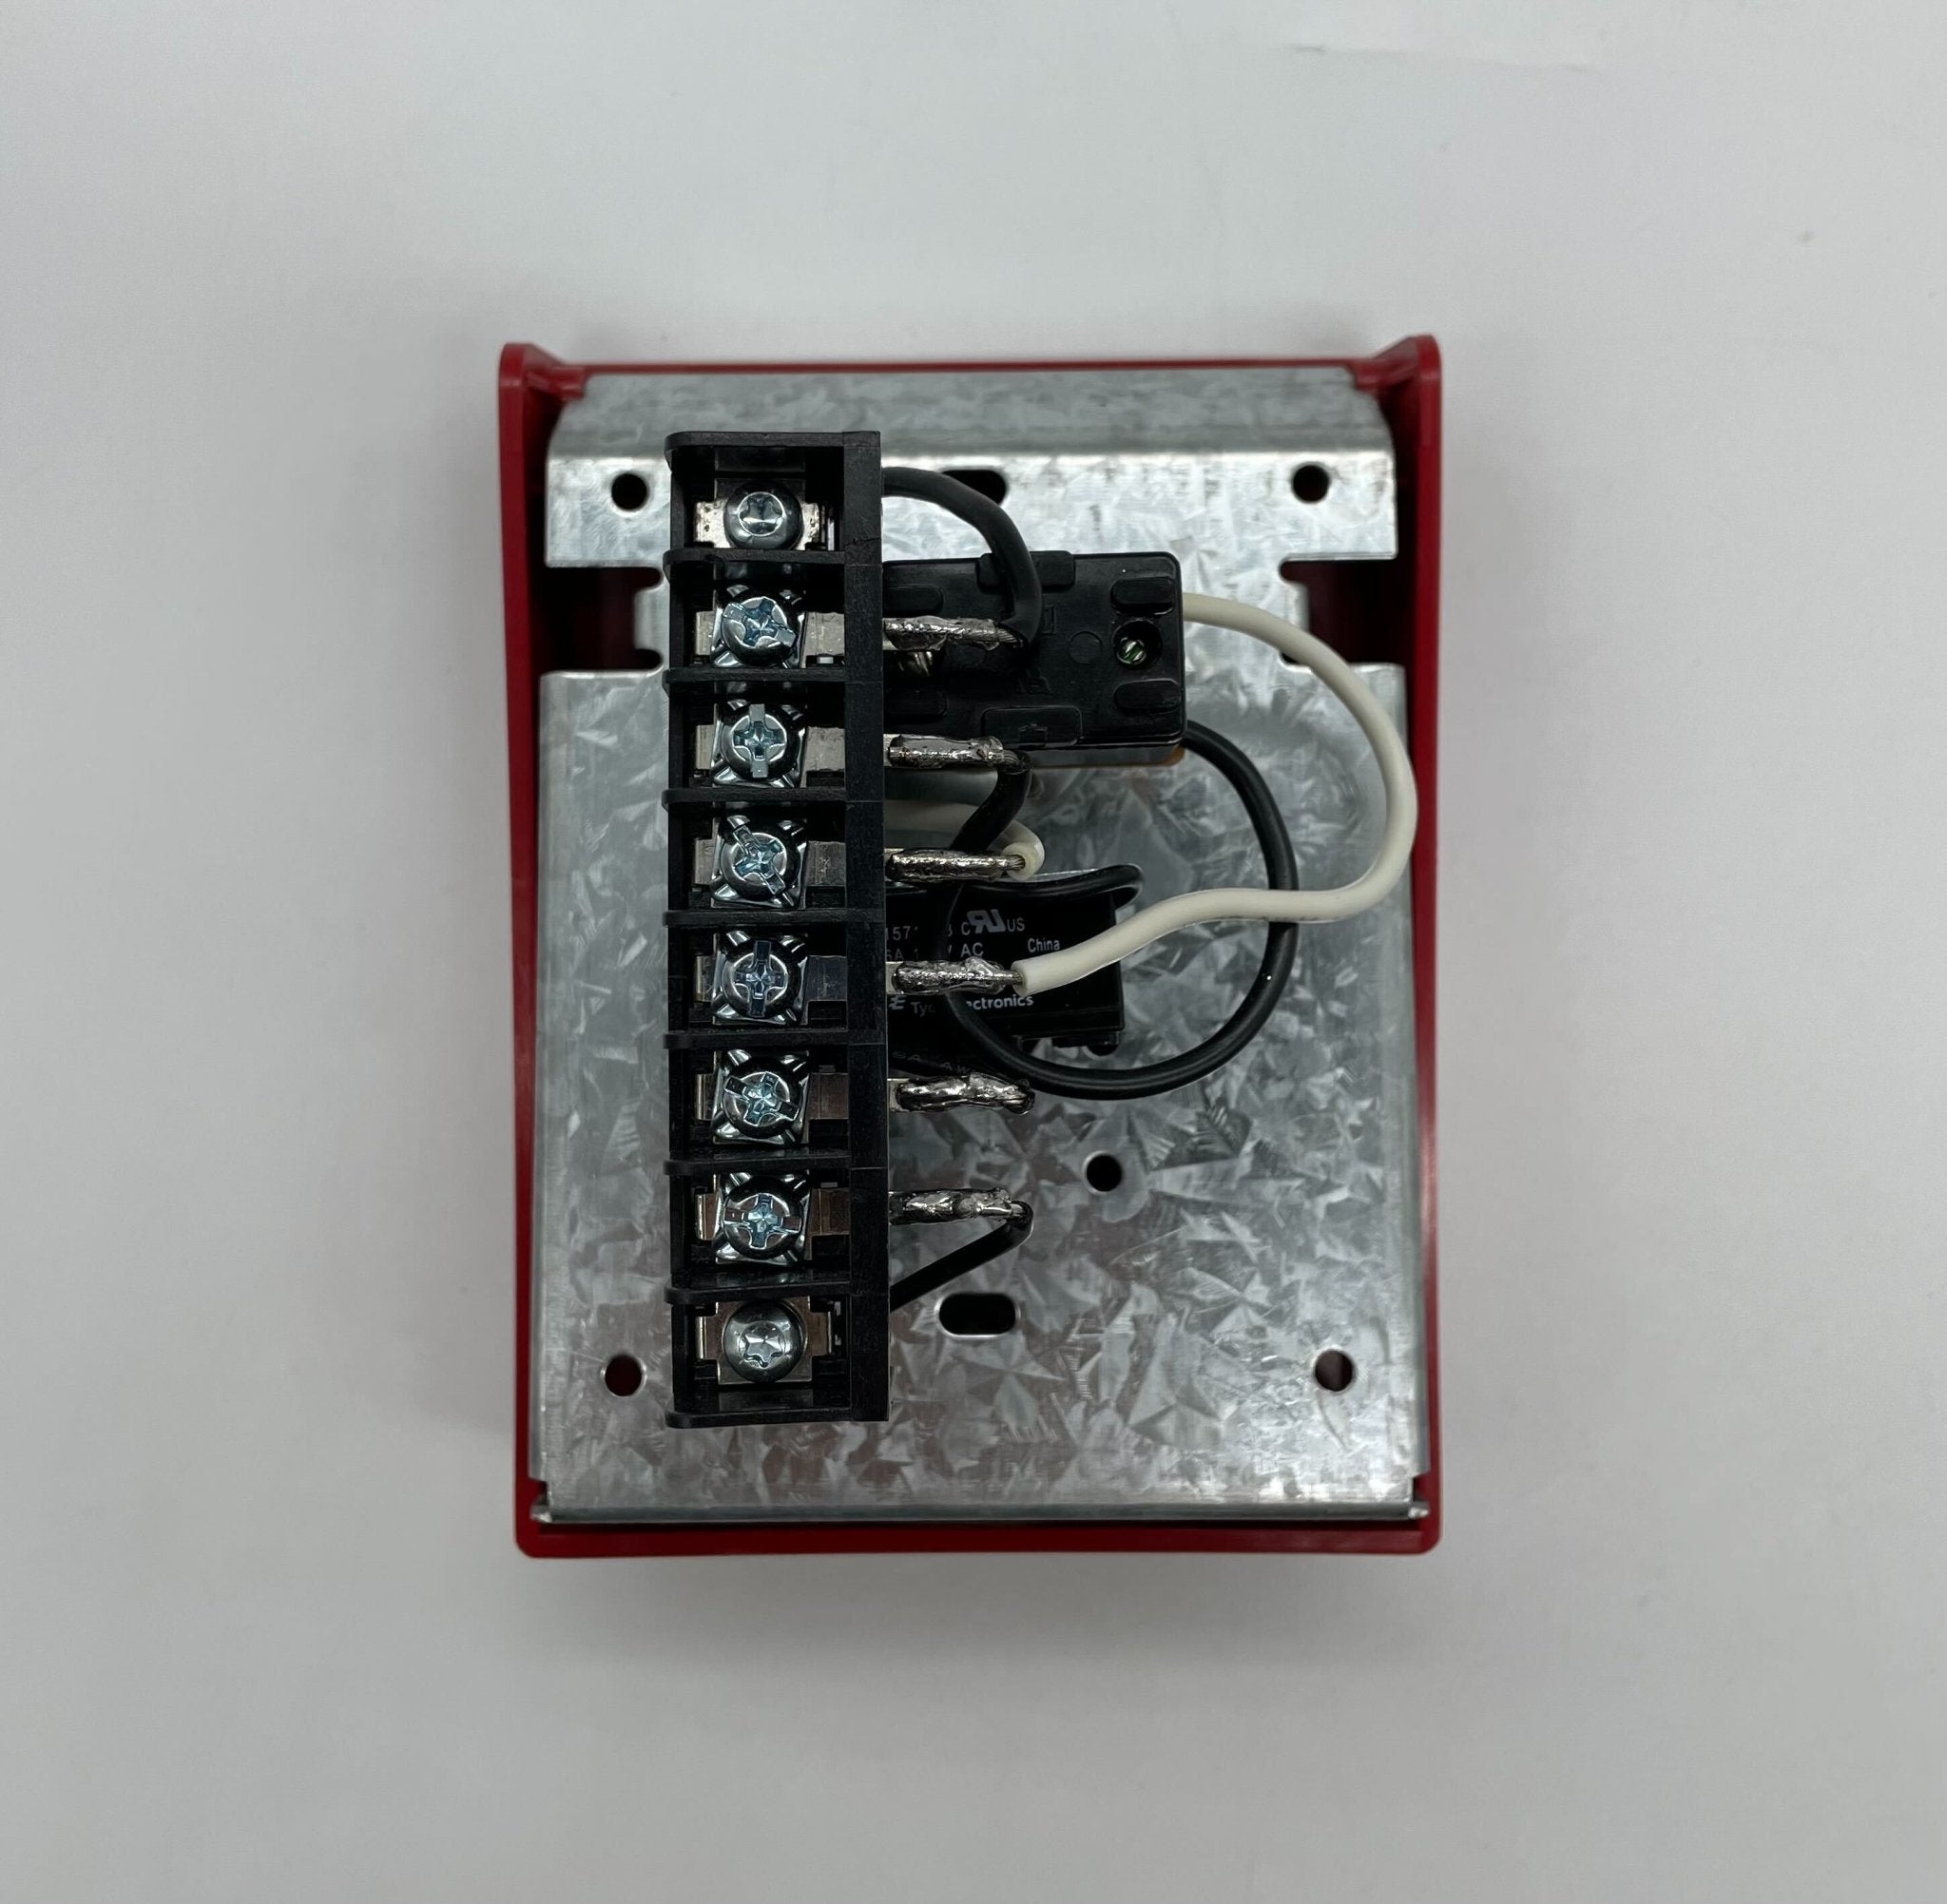 Simplex 2099-9759 - The Fire Alarm Supplier